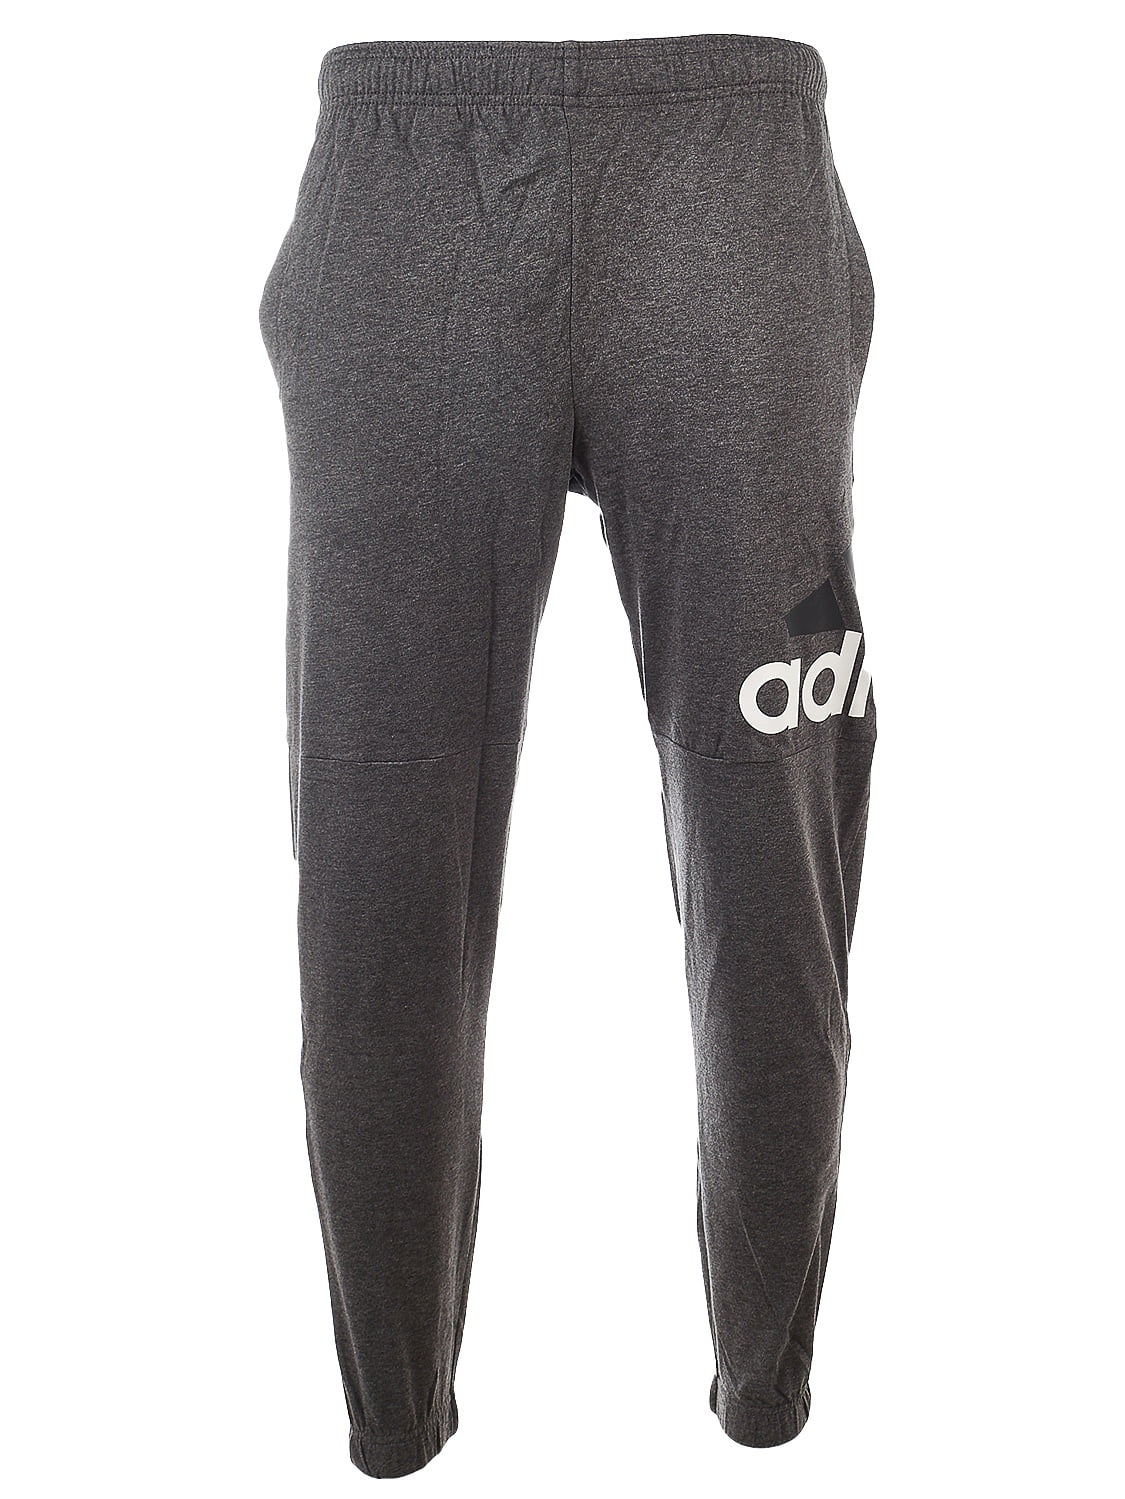 Adidas Essentials Performance Logo Pants - Dark Grey Heather/White - Mens -  S